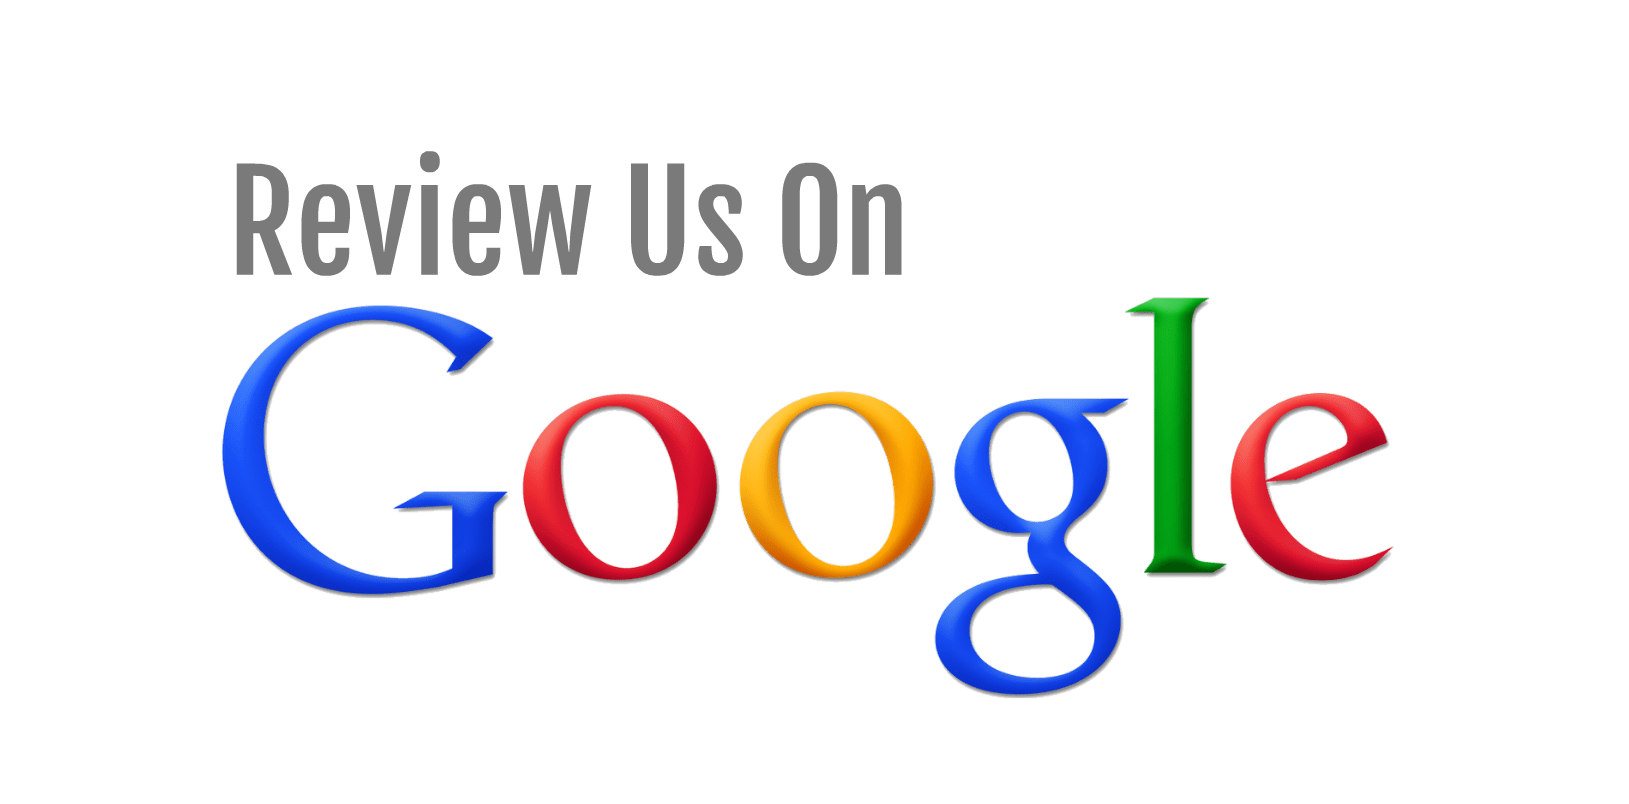 Review us on Google logo | Hudson, FL | Seabreeze Pest Control